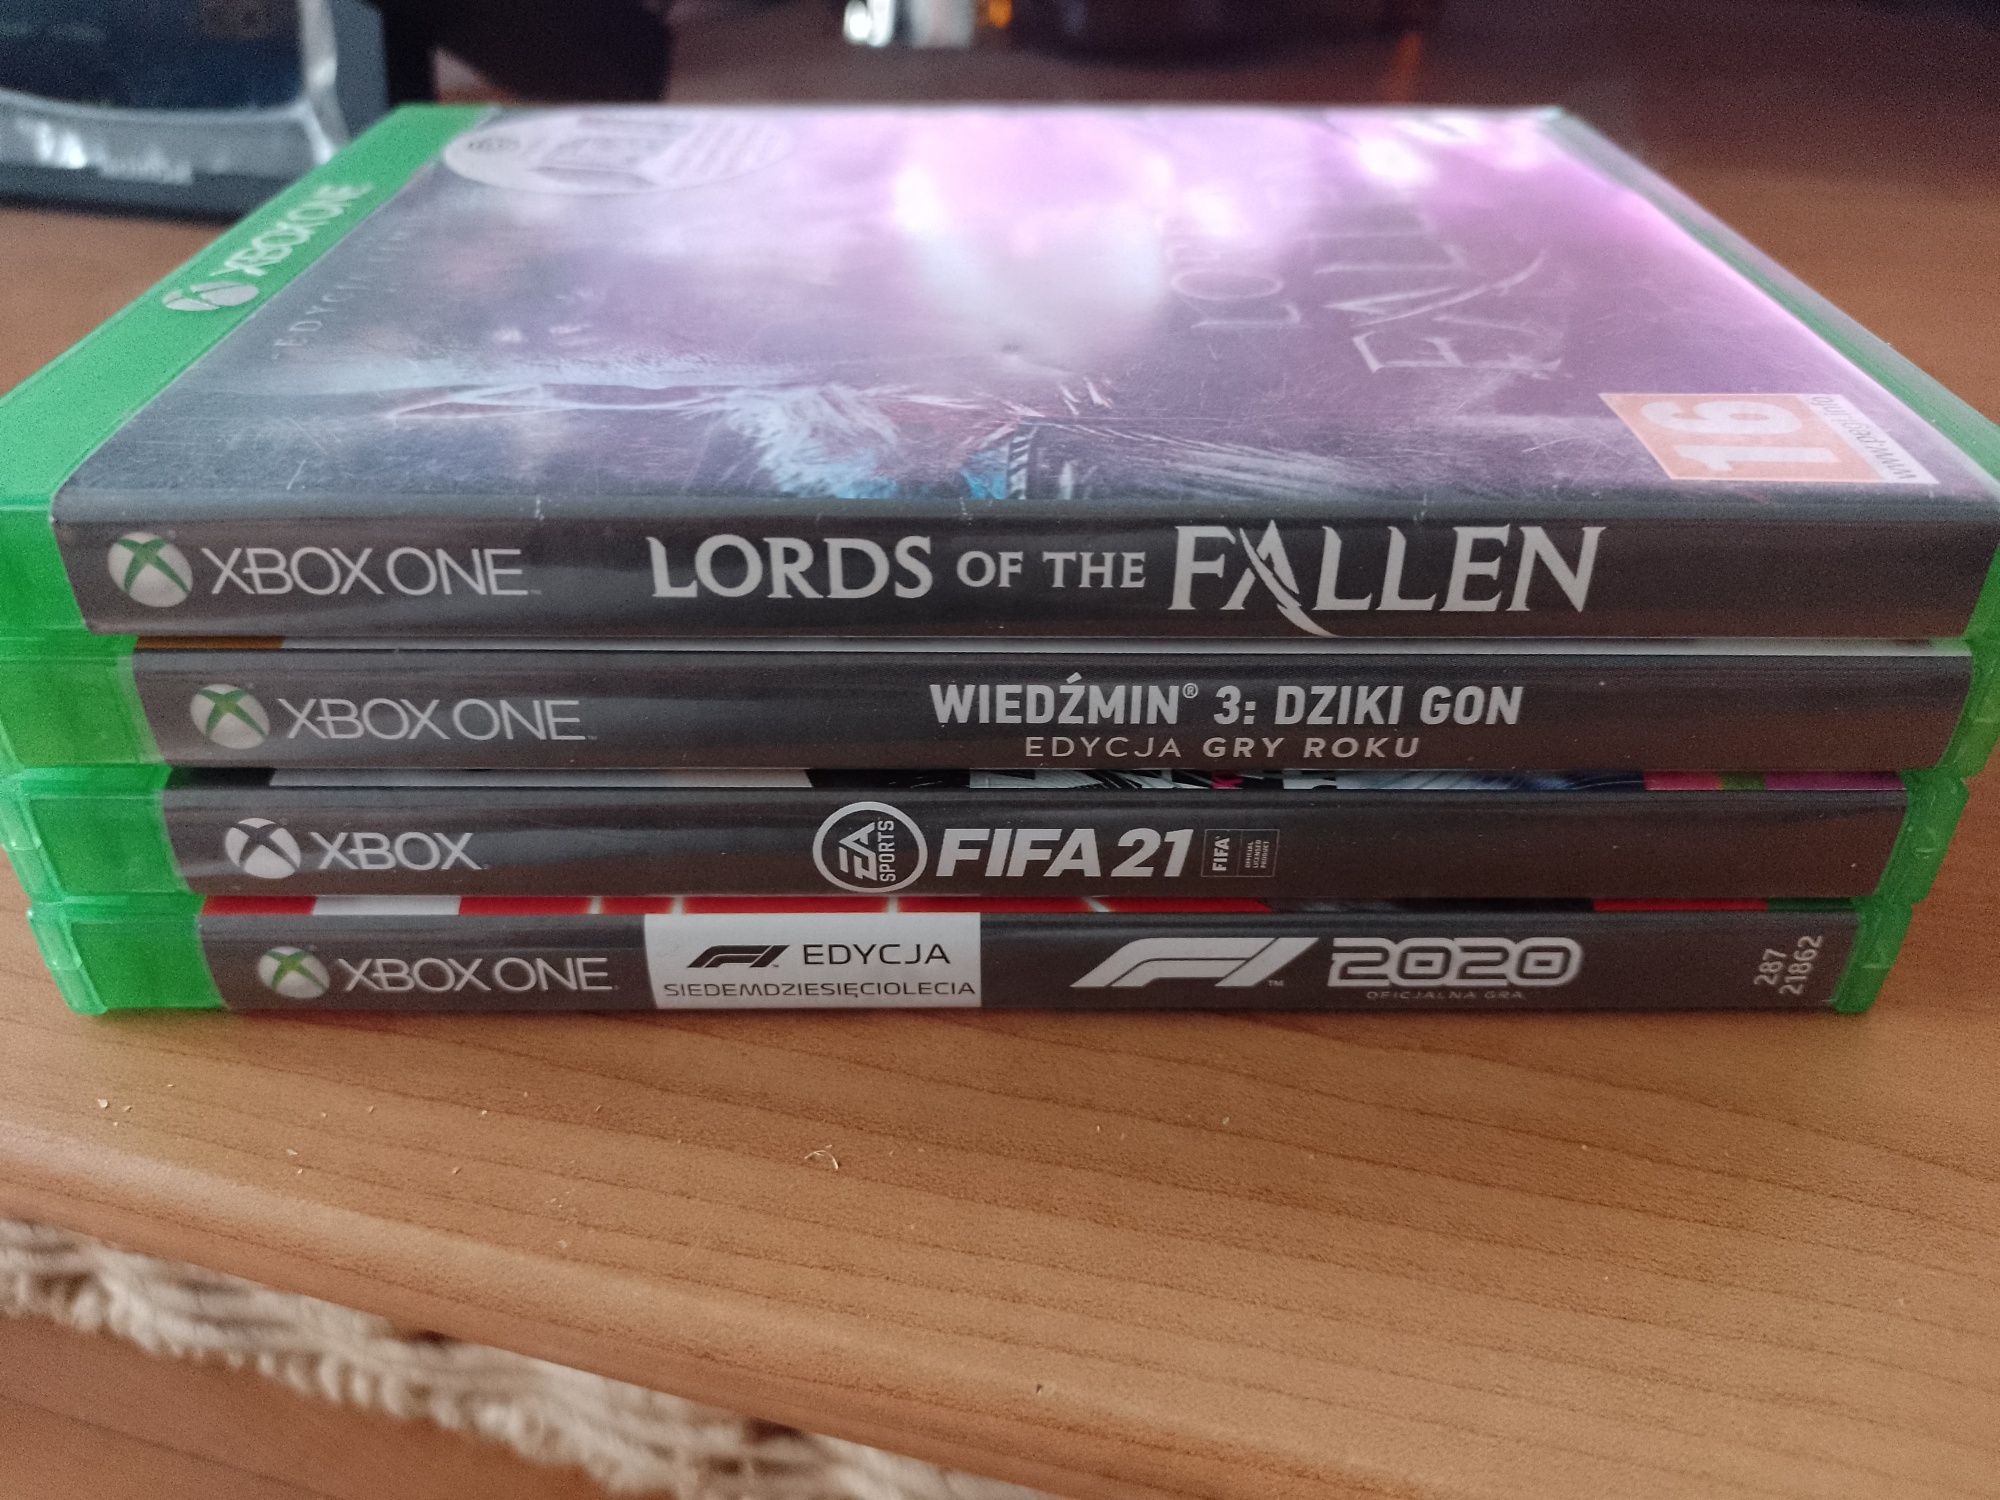 Gry Xbox one wiedźmin 3, lords od the fallen, FIFA 21, F1 2020